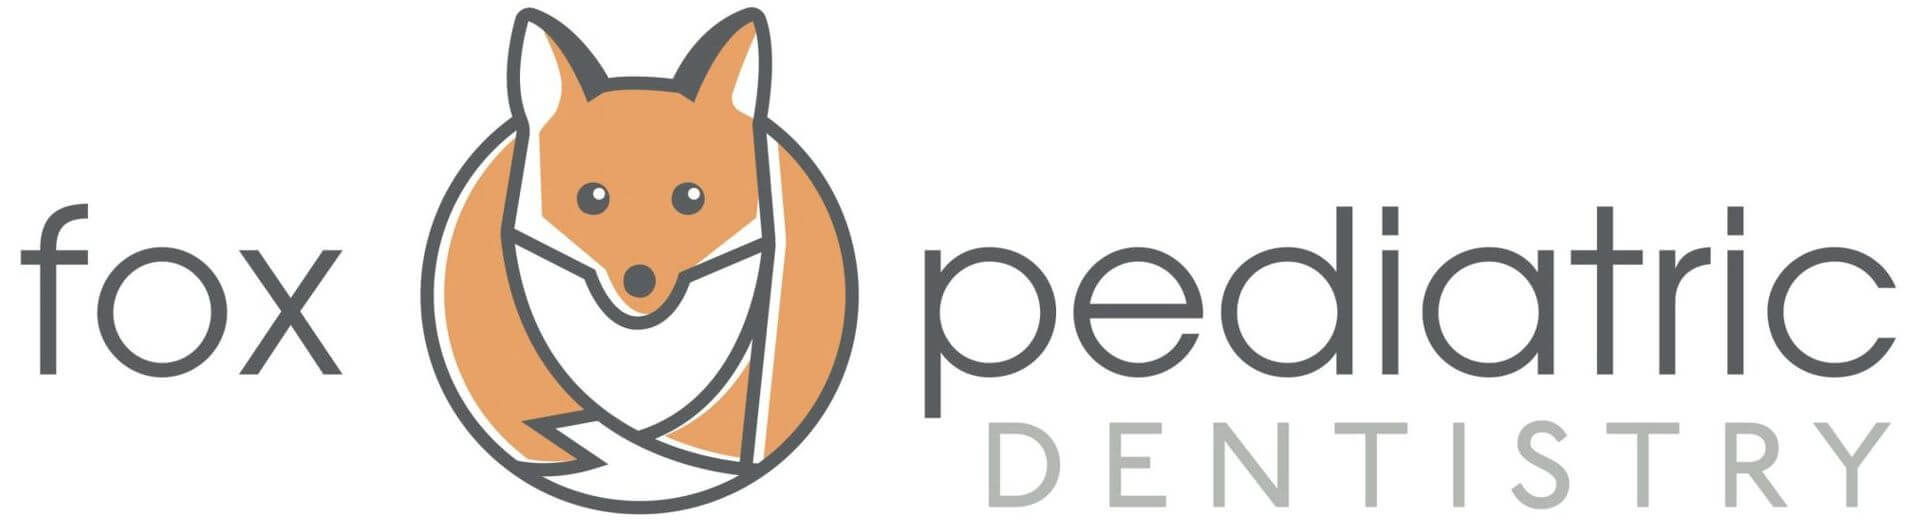 Fox Pediatric Dentistry logo